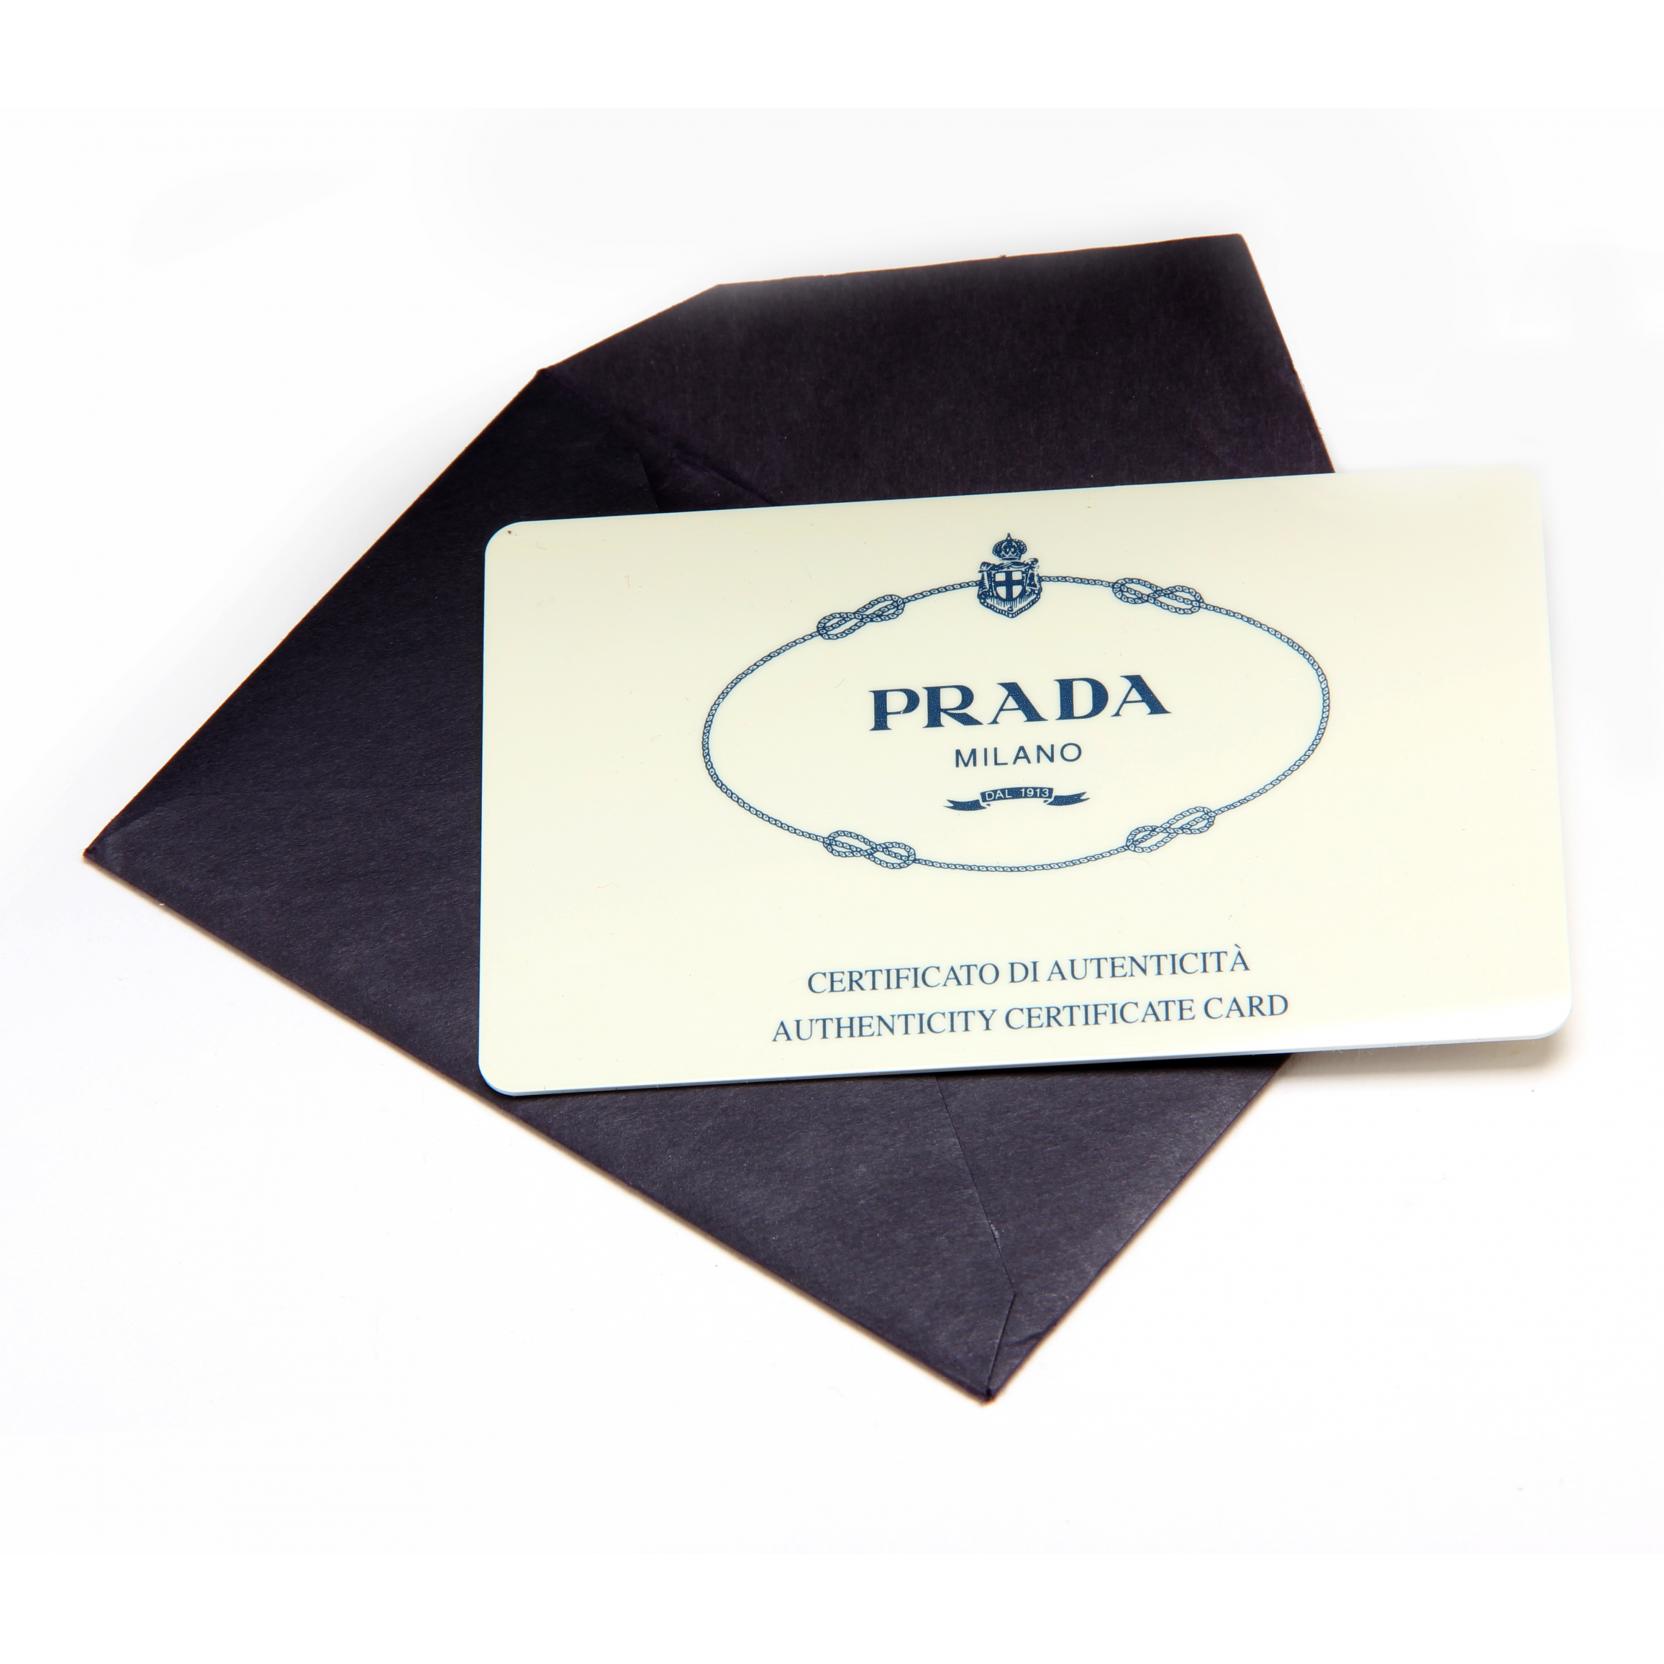 Prada Authenticity Card With Black Envelope